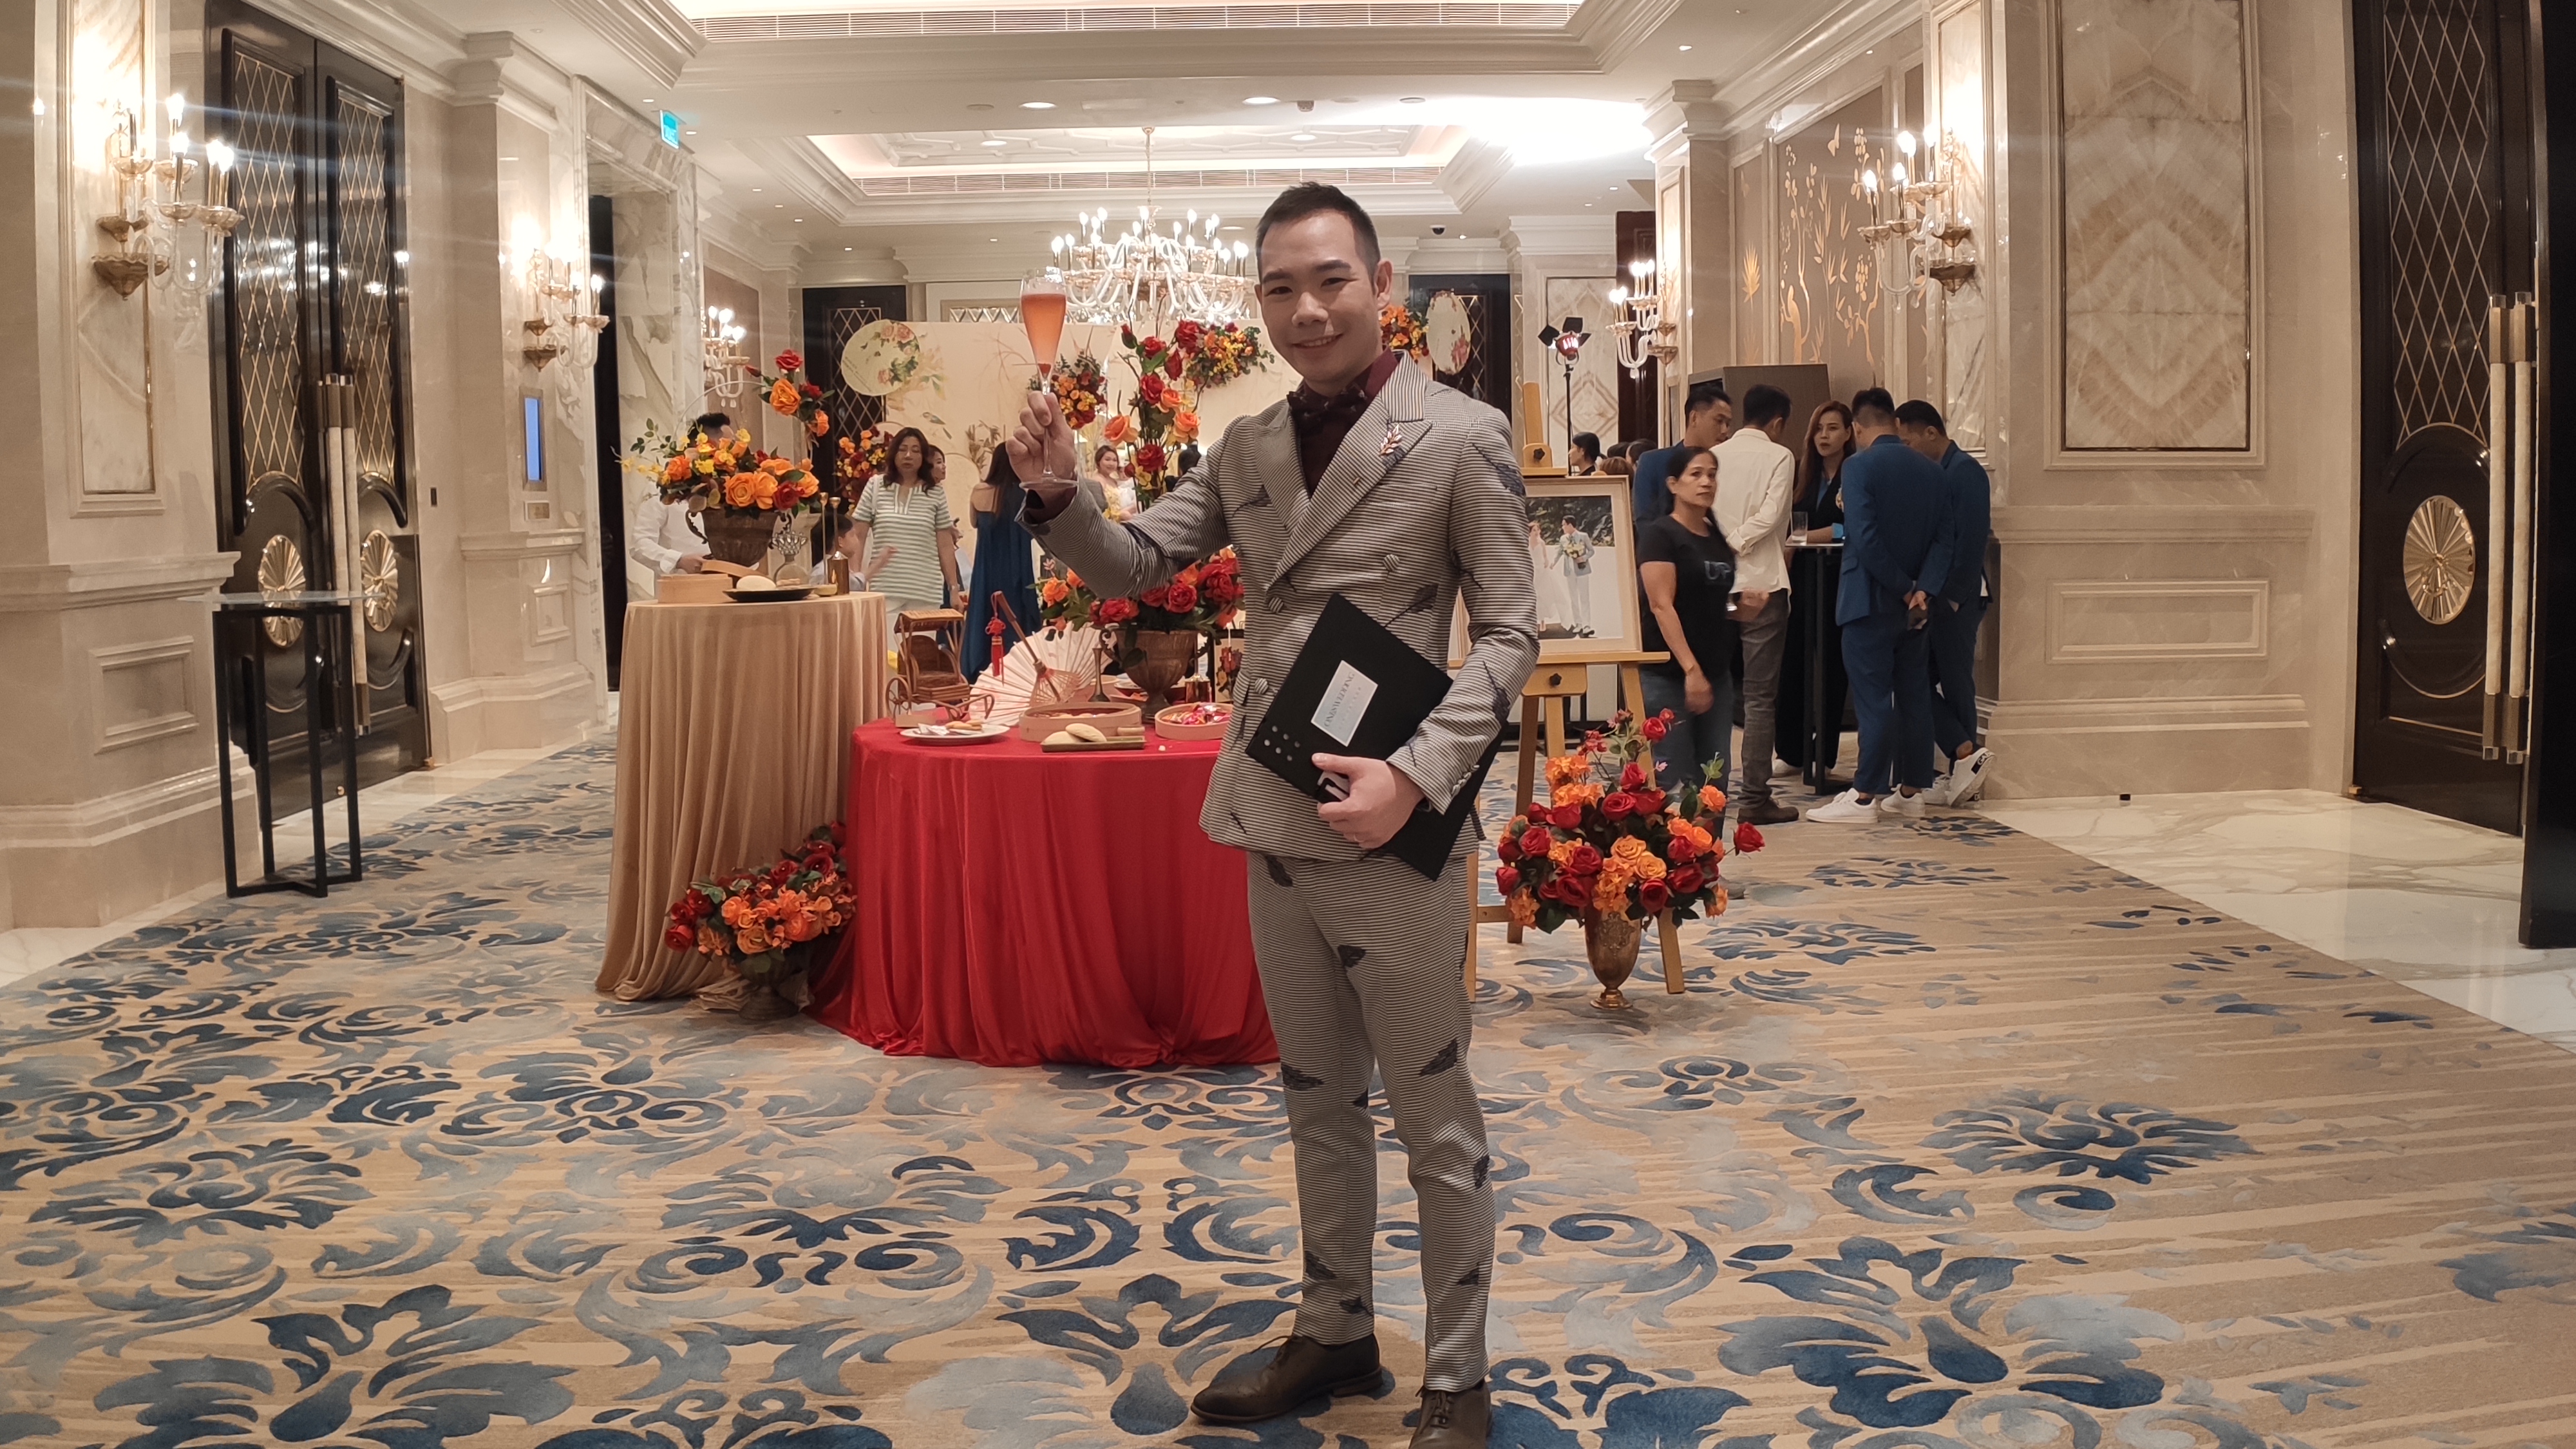  MC Alfred之司儀主持紀錄: 20190928 Wedding MC 澳門全職婚禮統籌司儀 Alfred @ 澳門麗思卡爾頓酒店 The Ritz-Carlton Macau